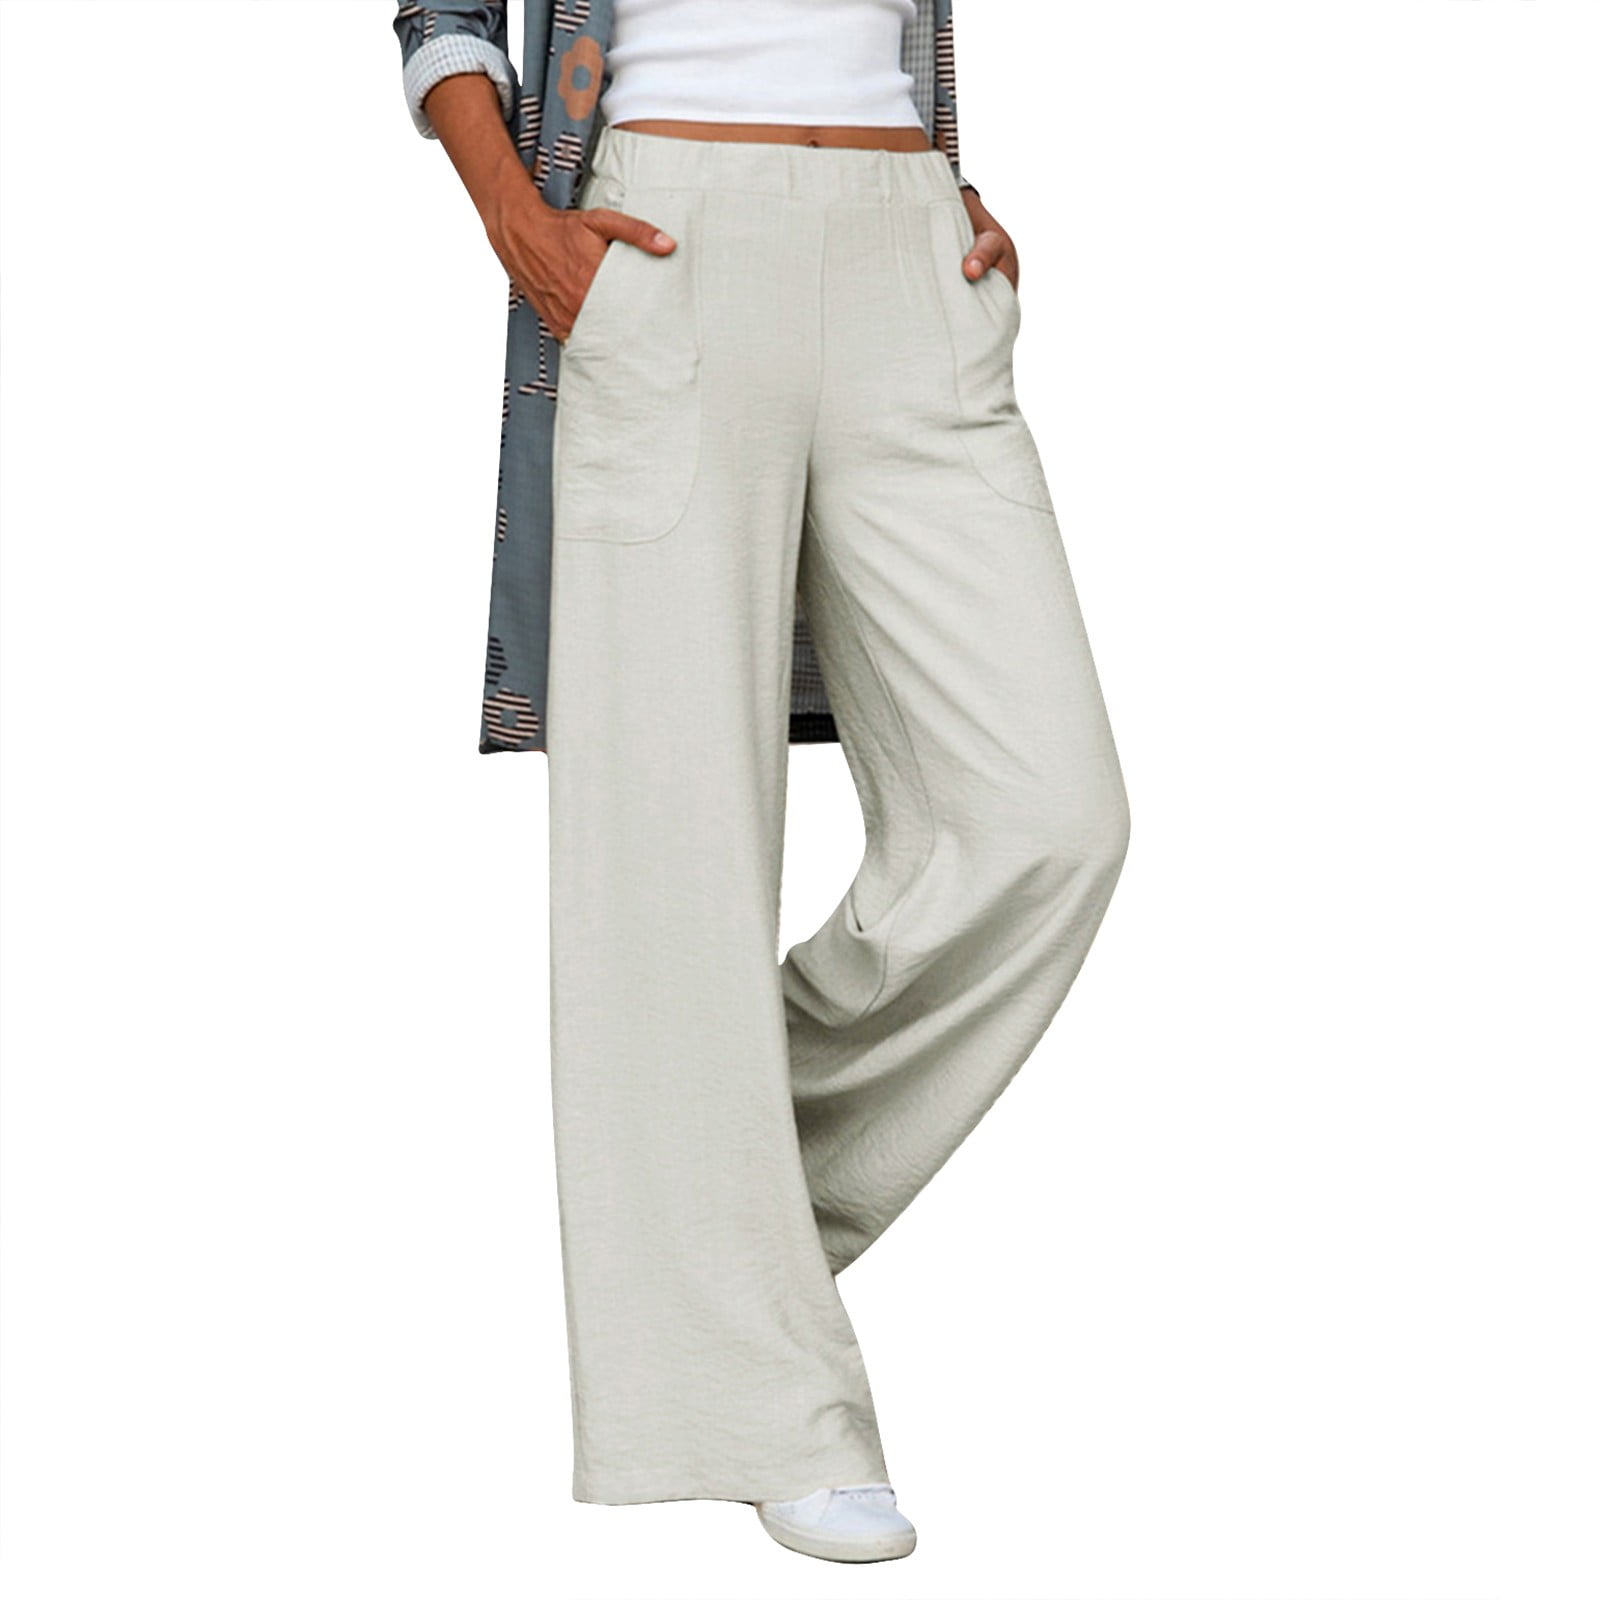 Comfortable Business Casual Pants for Women Women's Belt Less High